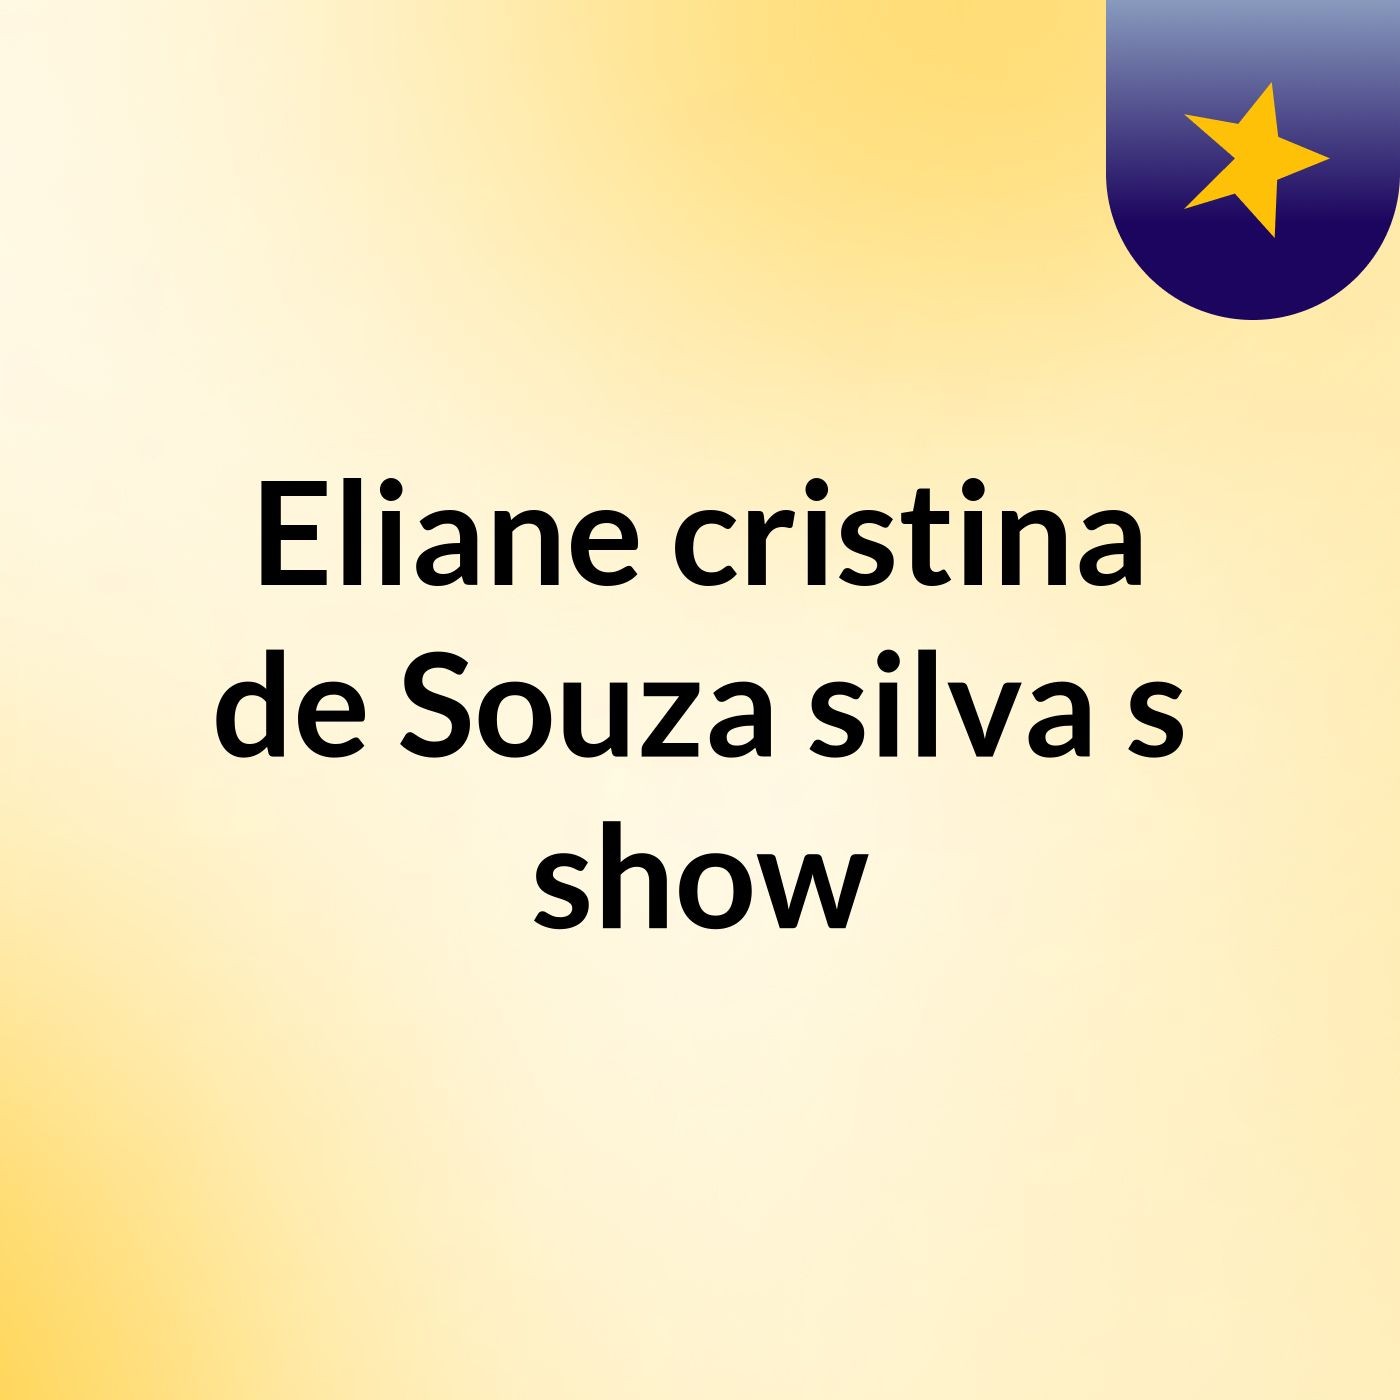 Eliane cristina de Souza silva's show